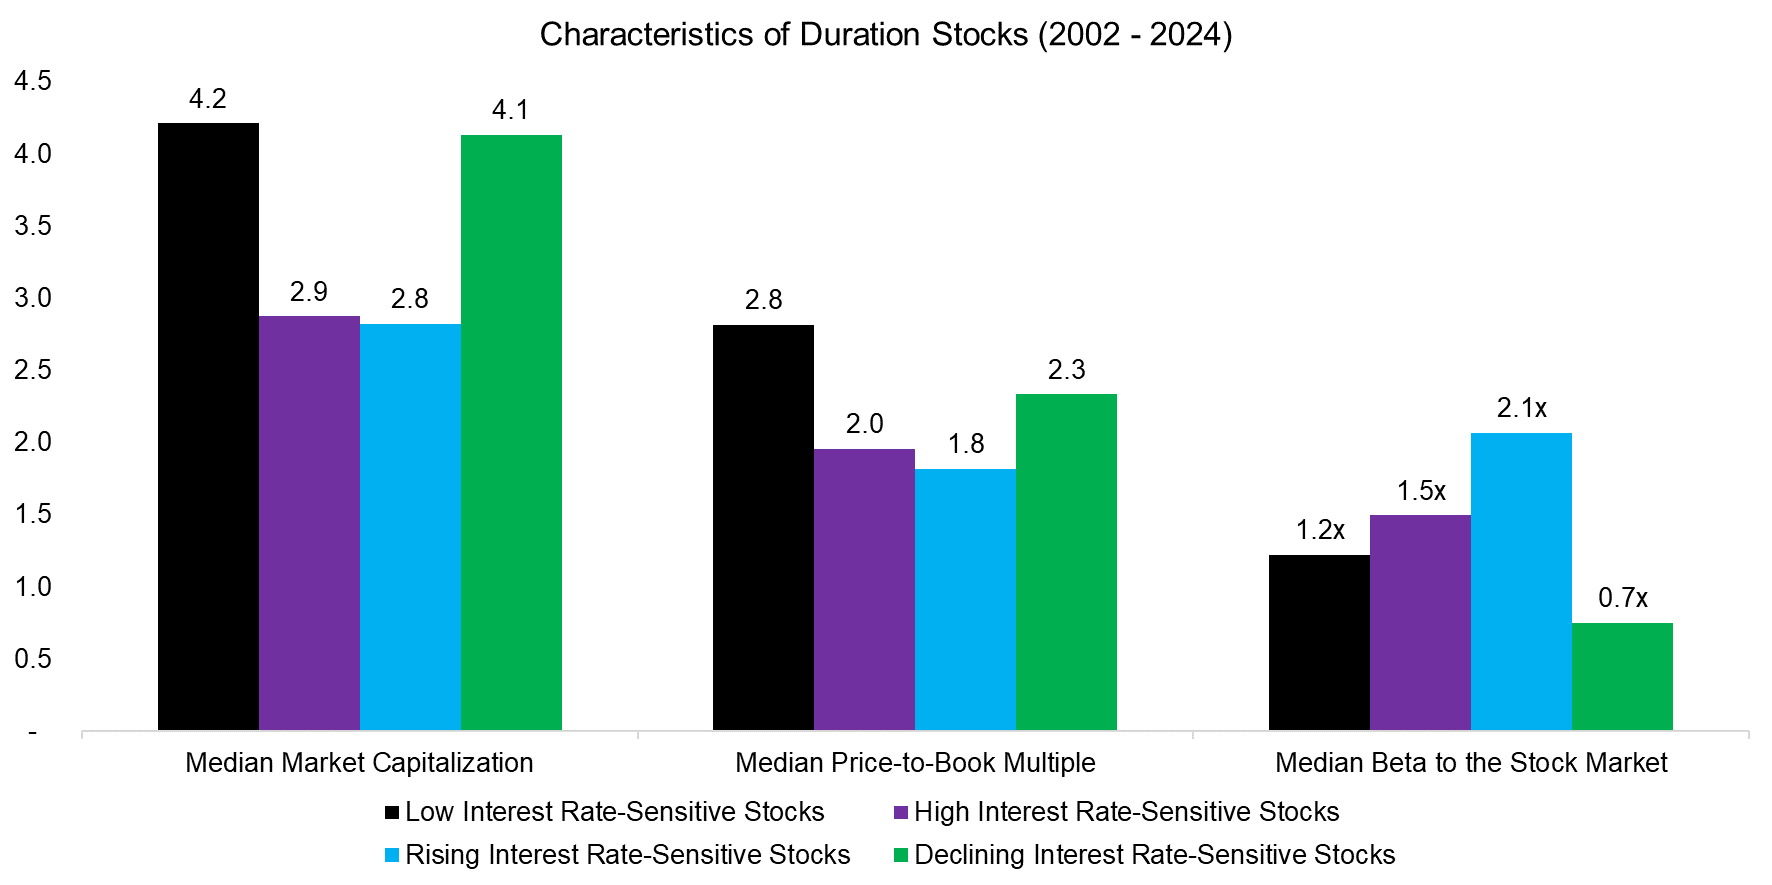 Characteristics of Duration Stocks (2002 - 2024)